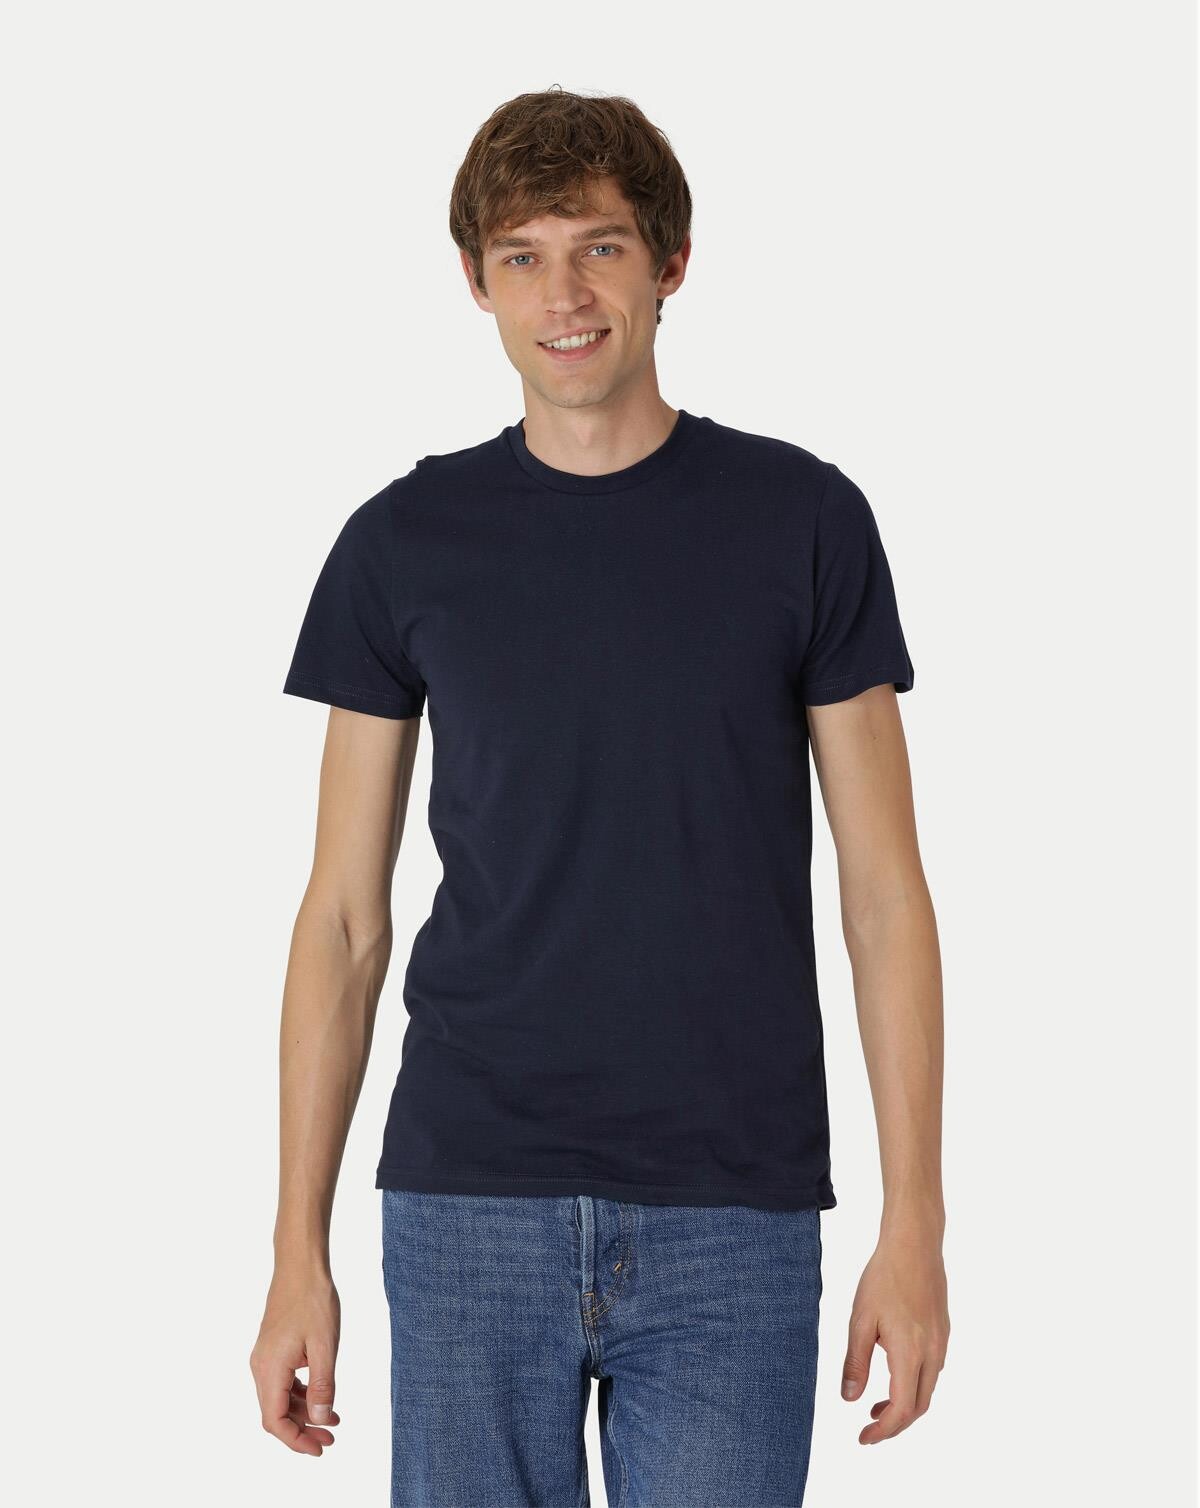 Neutral Økologisk T-shirt til - Tætsiddende (Navy, 5XL)